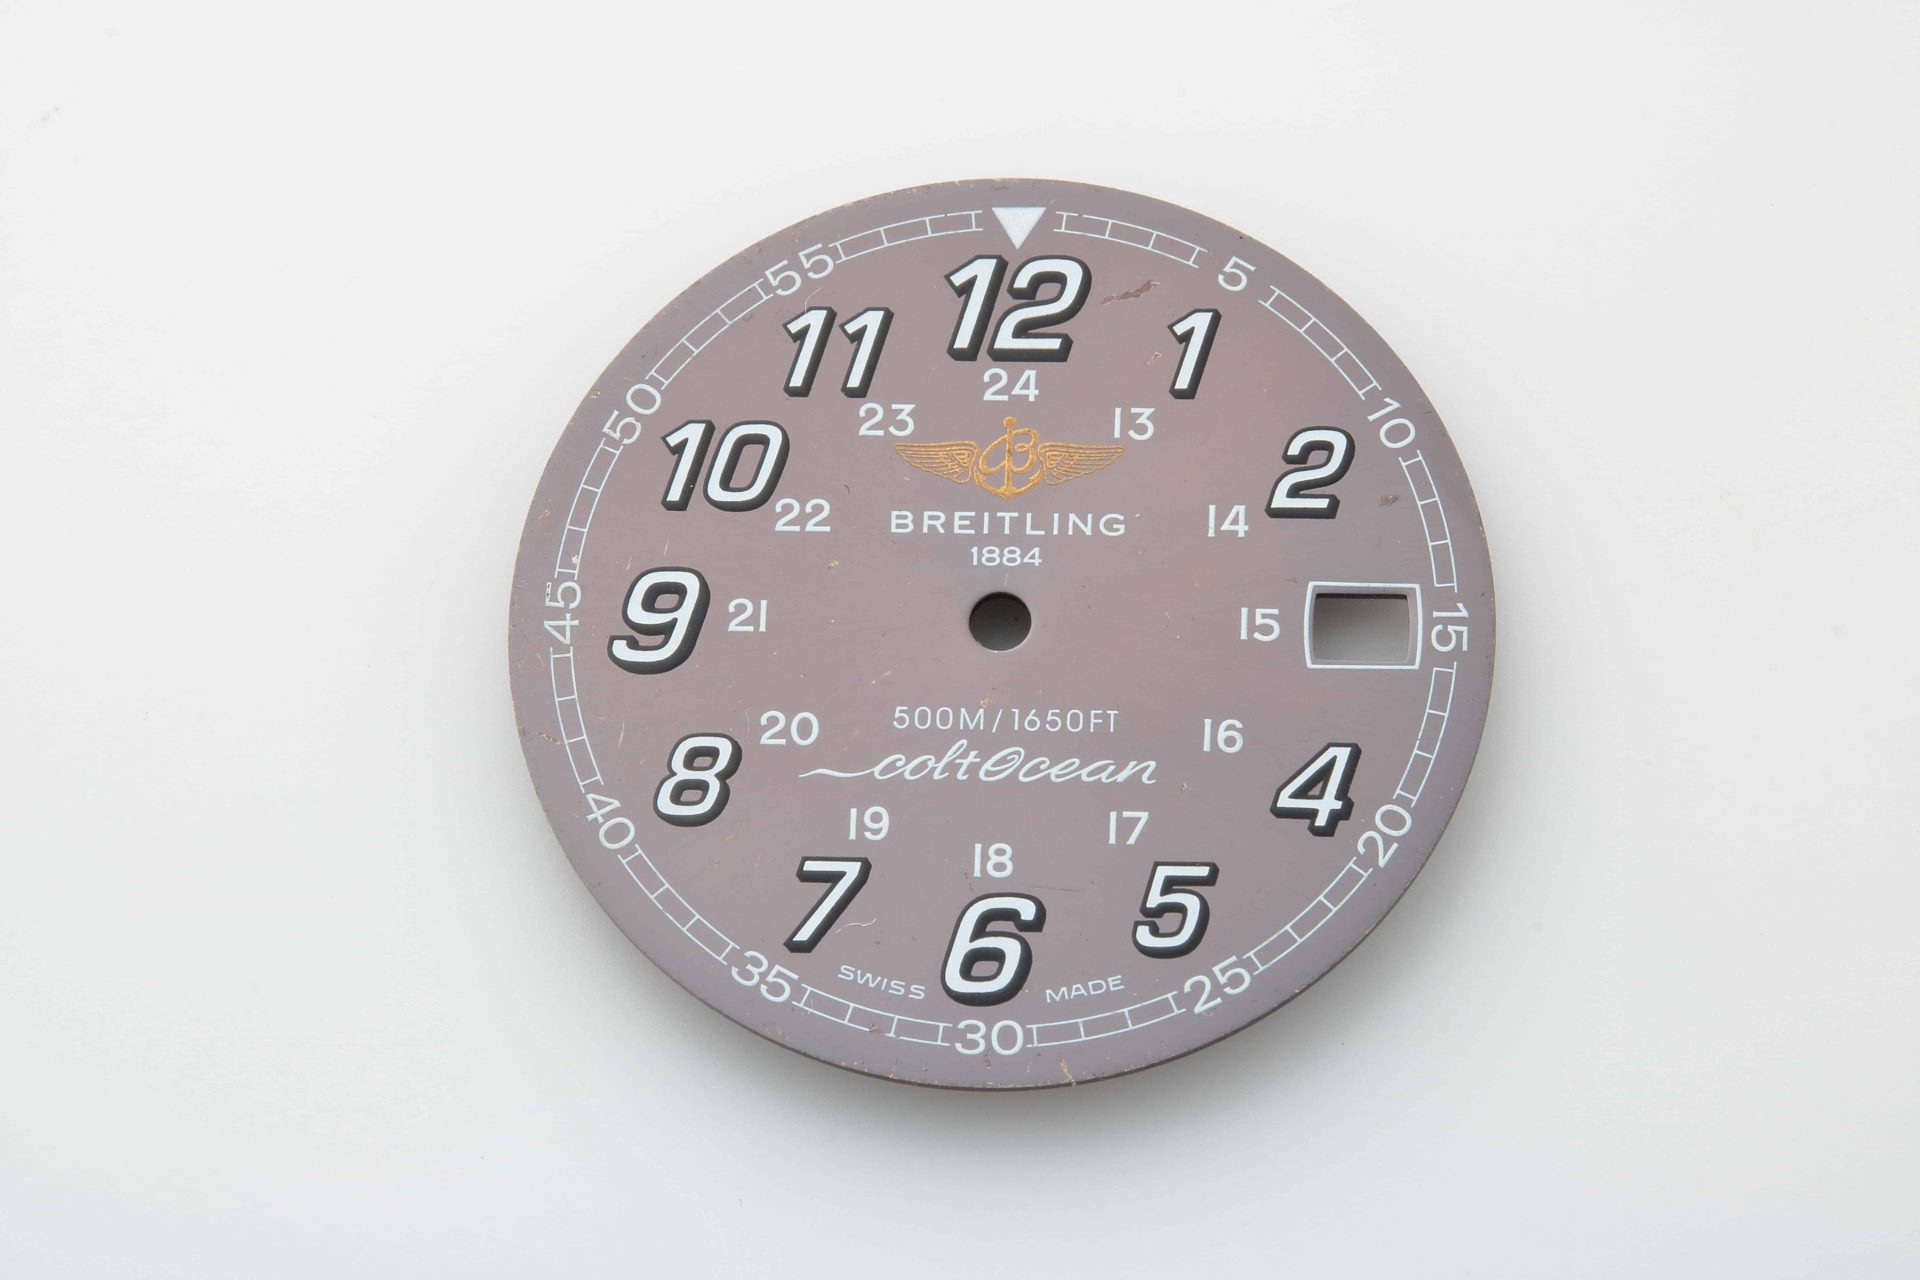 Breitling 1884 Colt Ocean 500M 1650FT Date Dial Watch Part - Rare Watch Parts